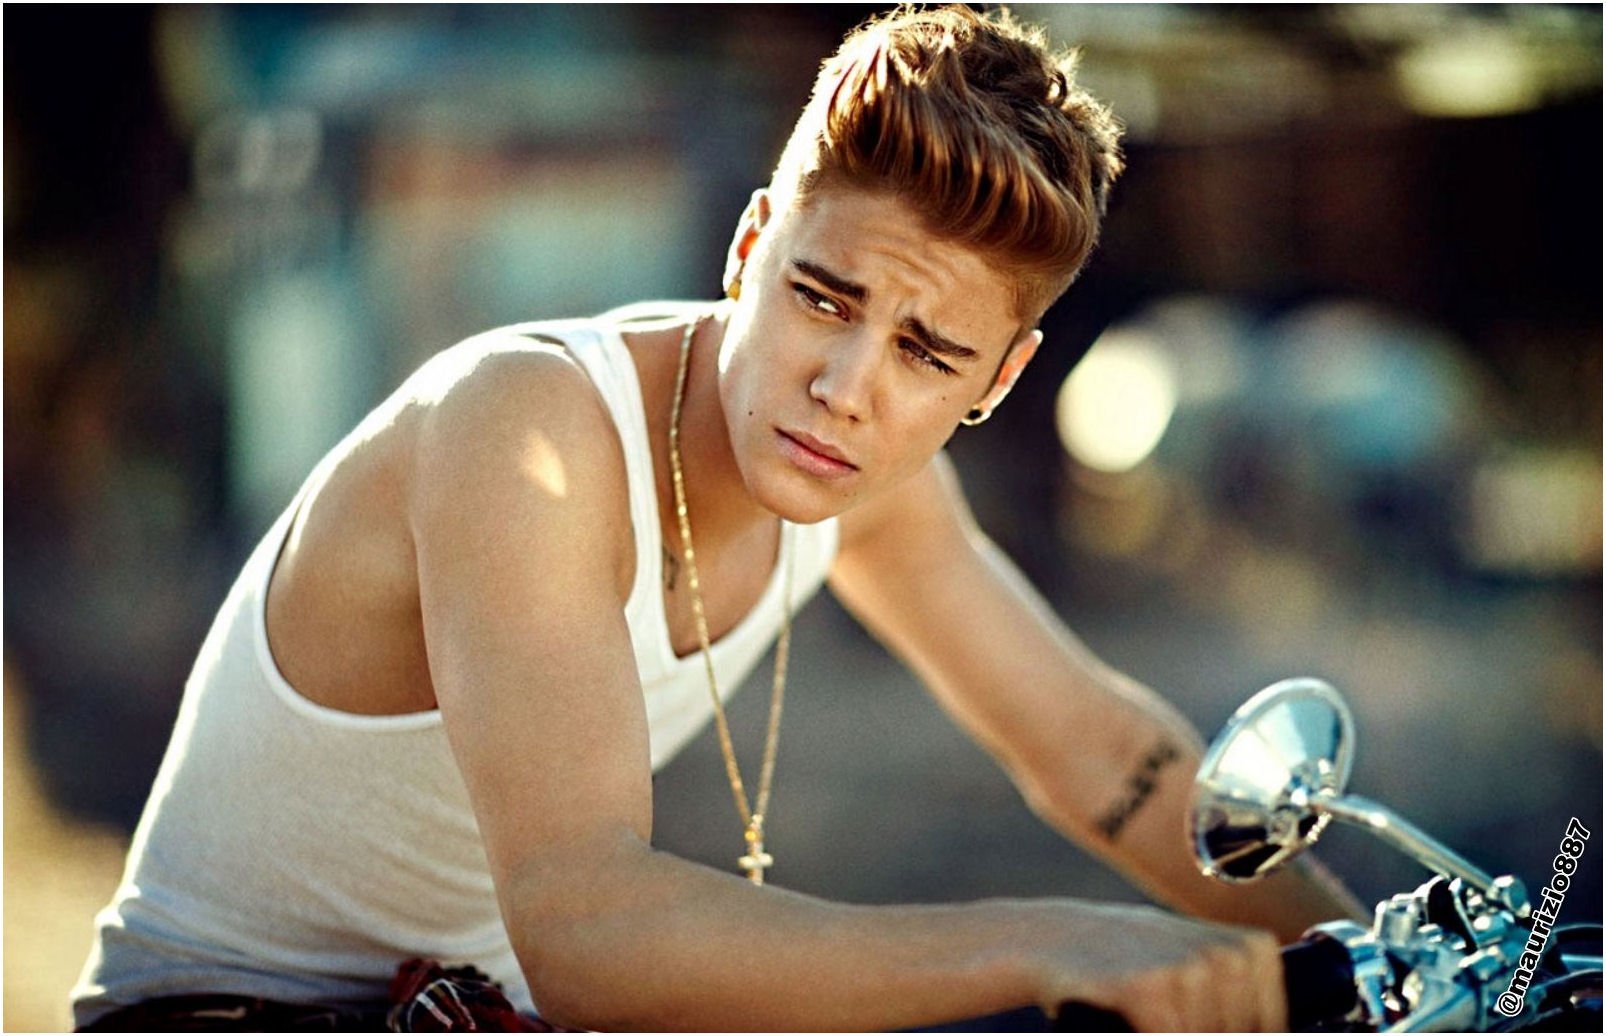 Джастін Бібер (Justin Bieber). Біографія. Фото. Особисте життя